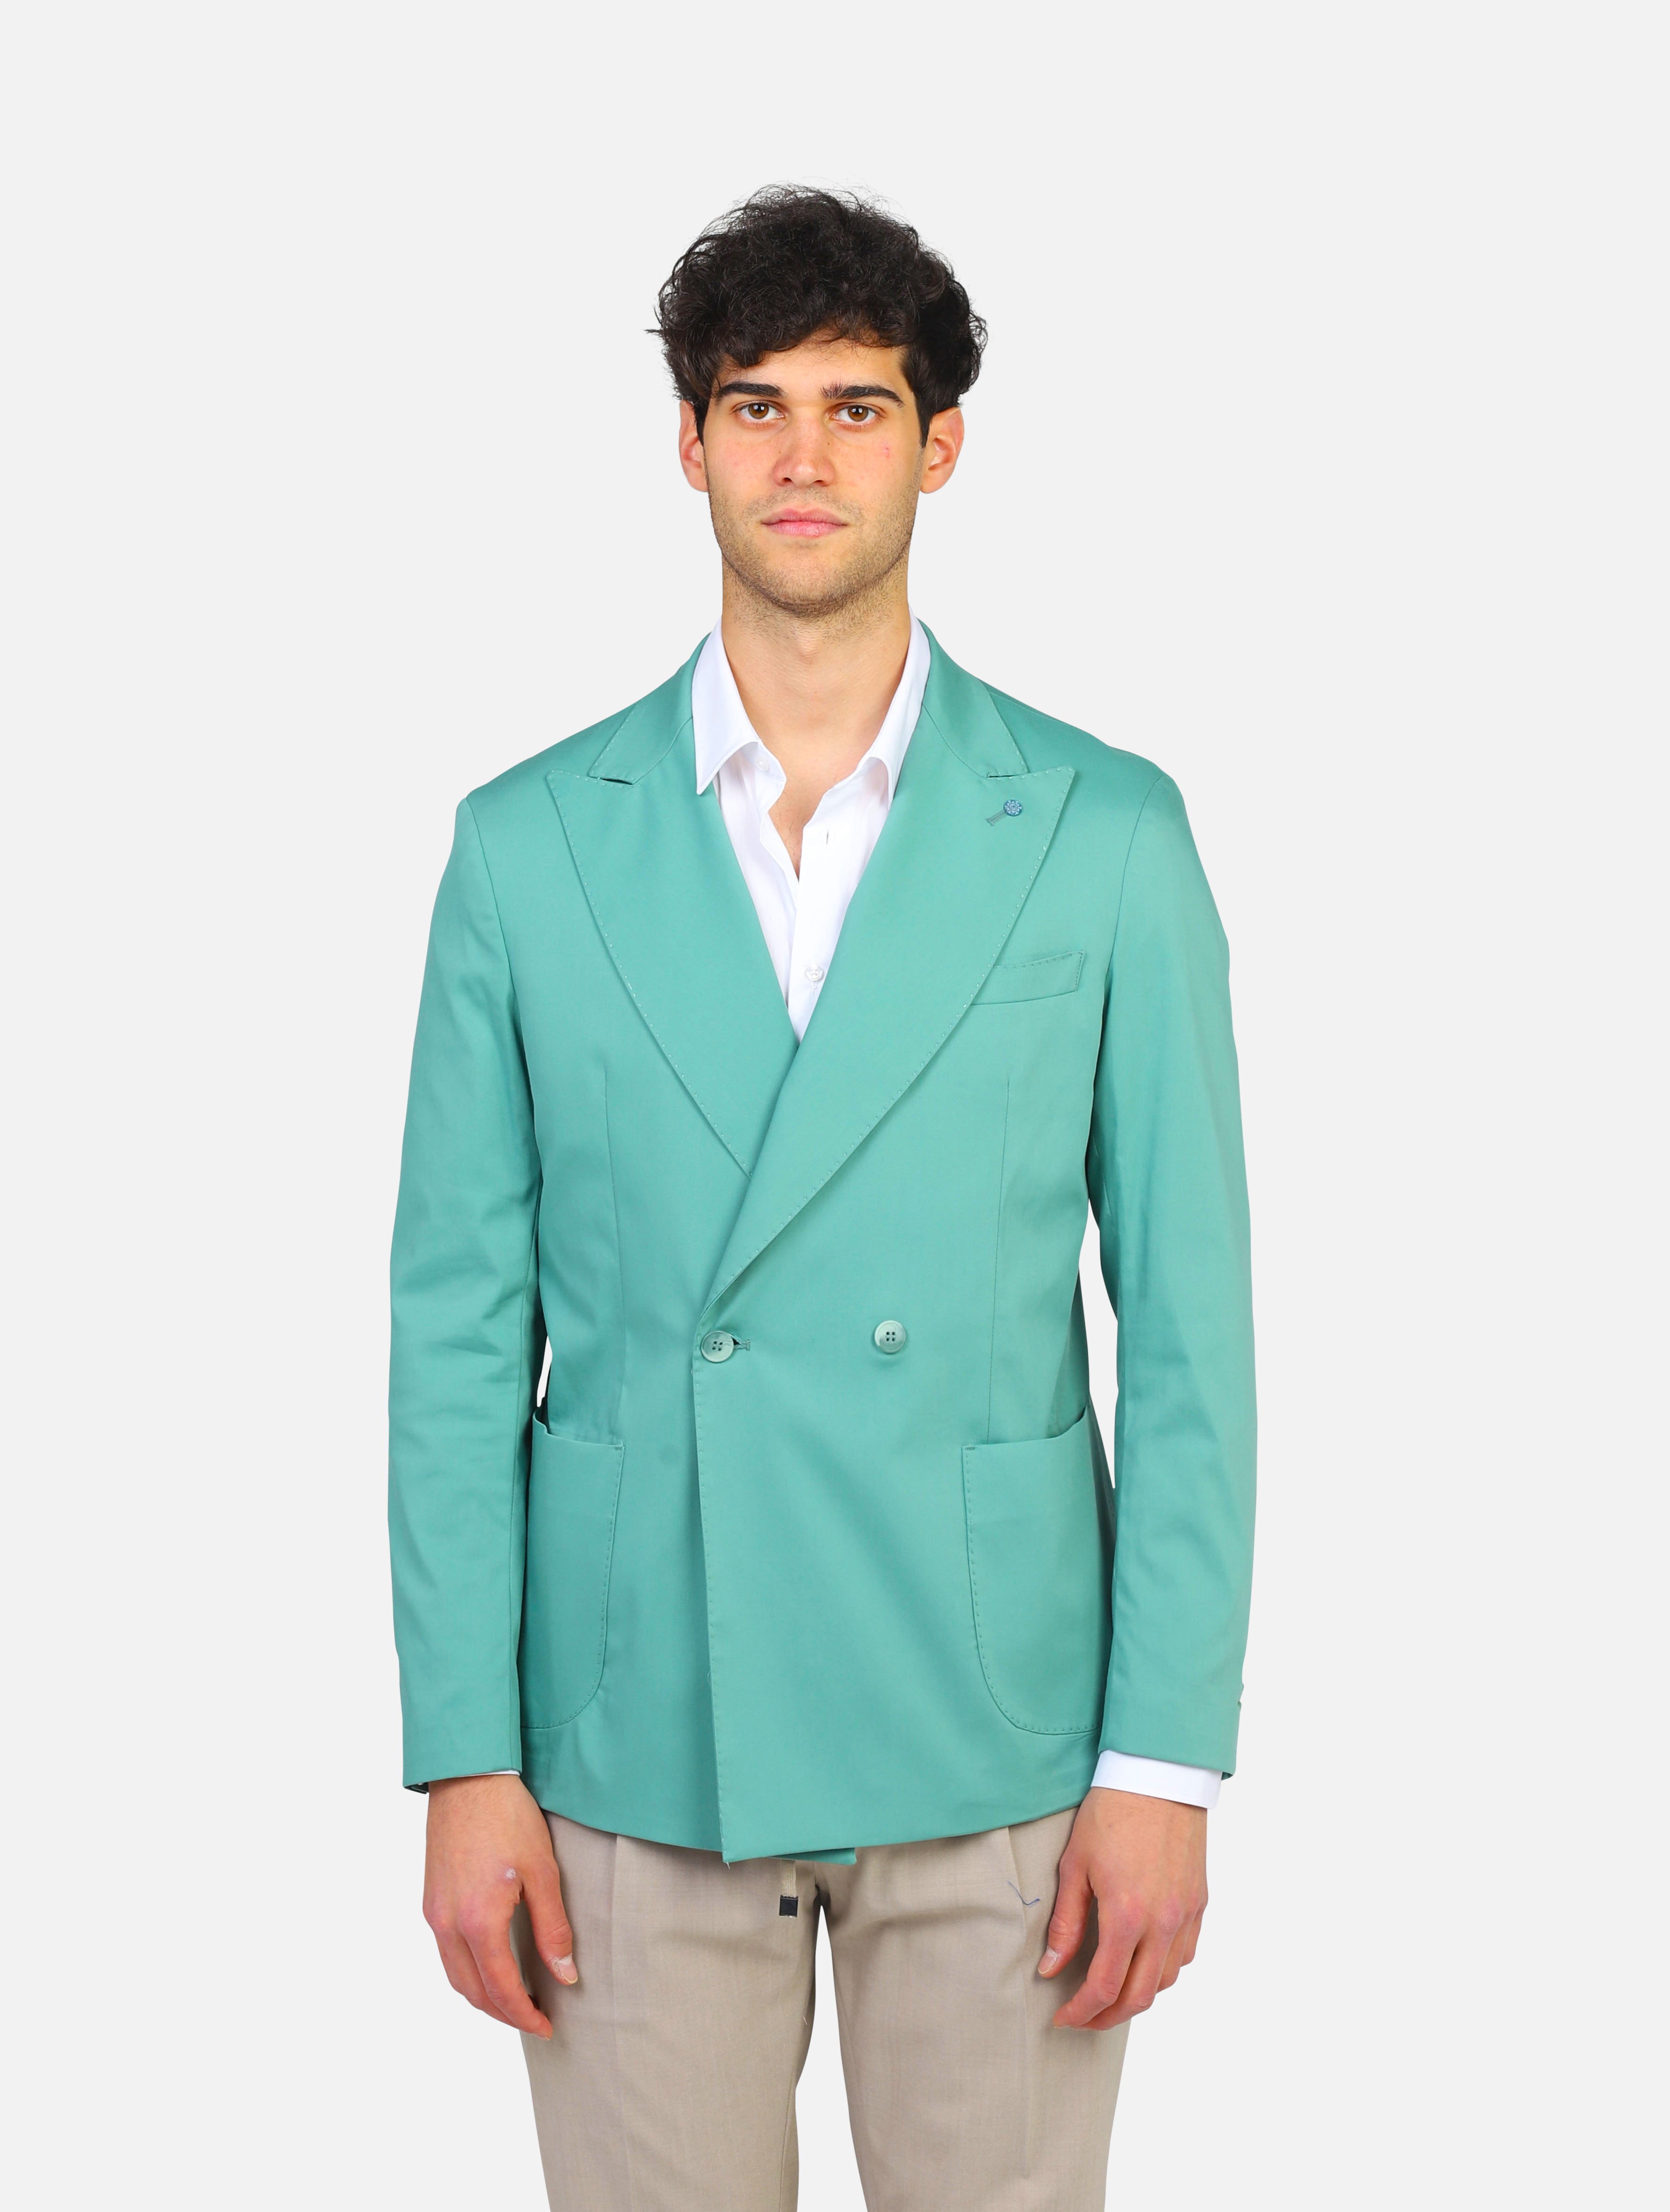 En avance jacket  -  verde uomo 